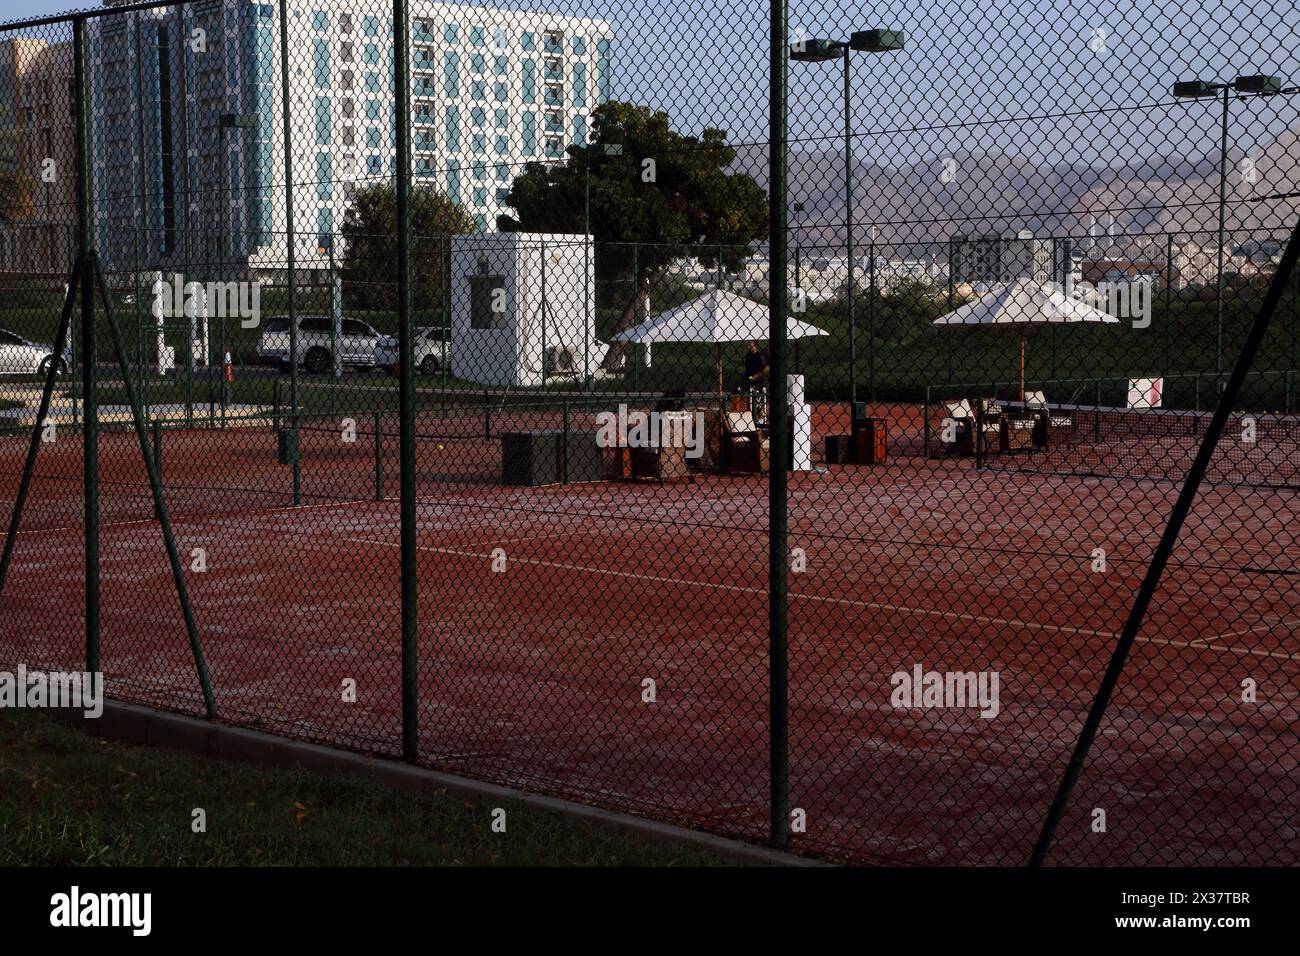 Campi da tennis al Chedi Hotel 5 stelle Luxury Resort Muscat Oman Foto Stock